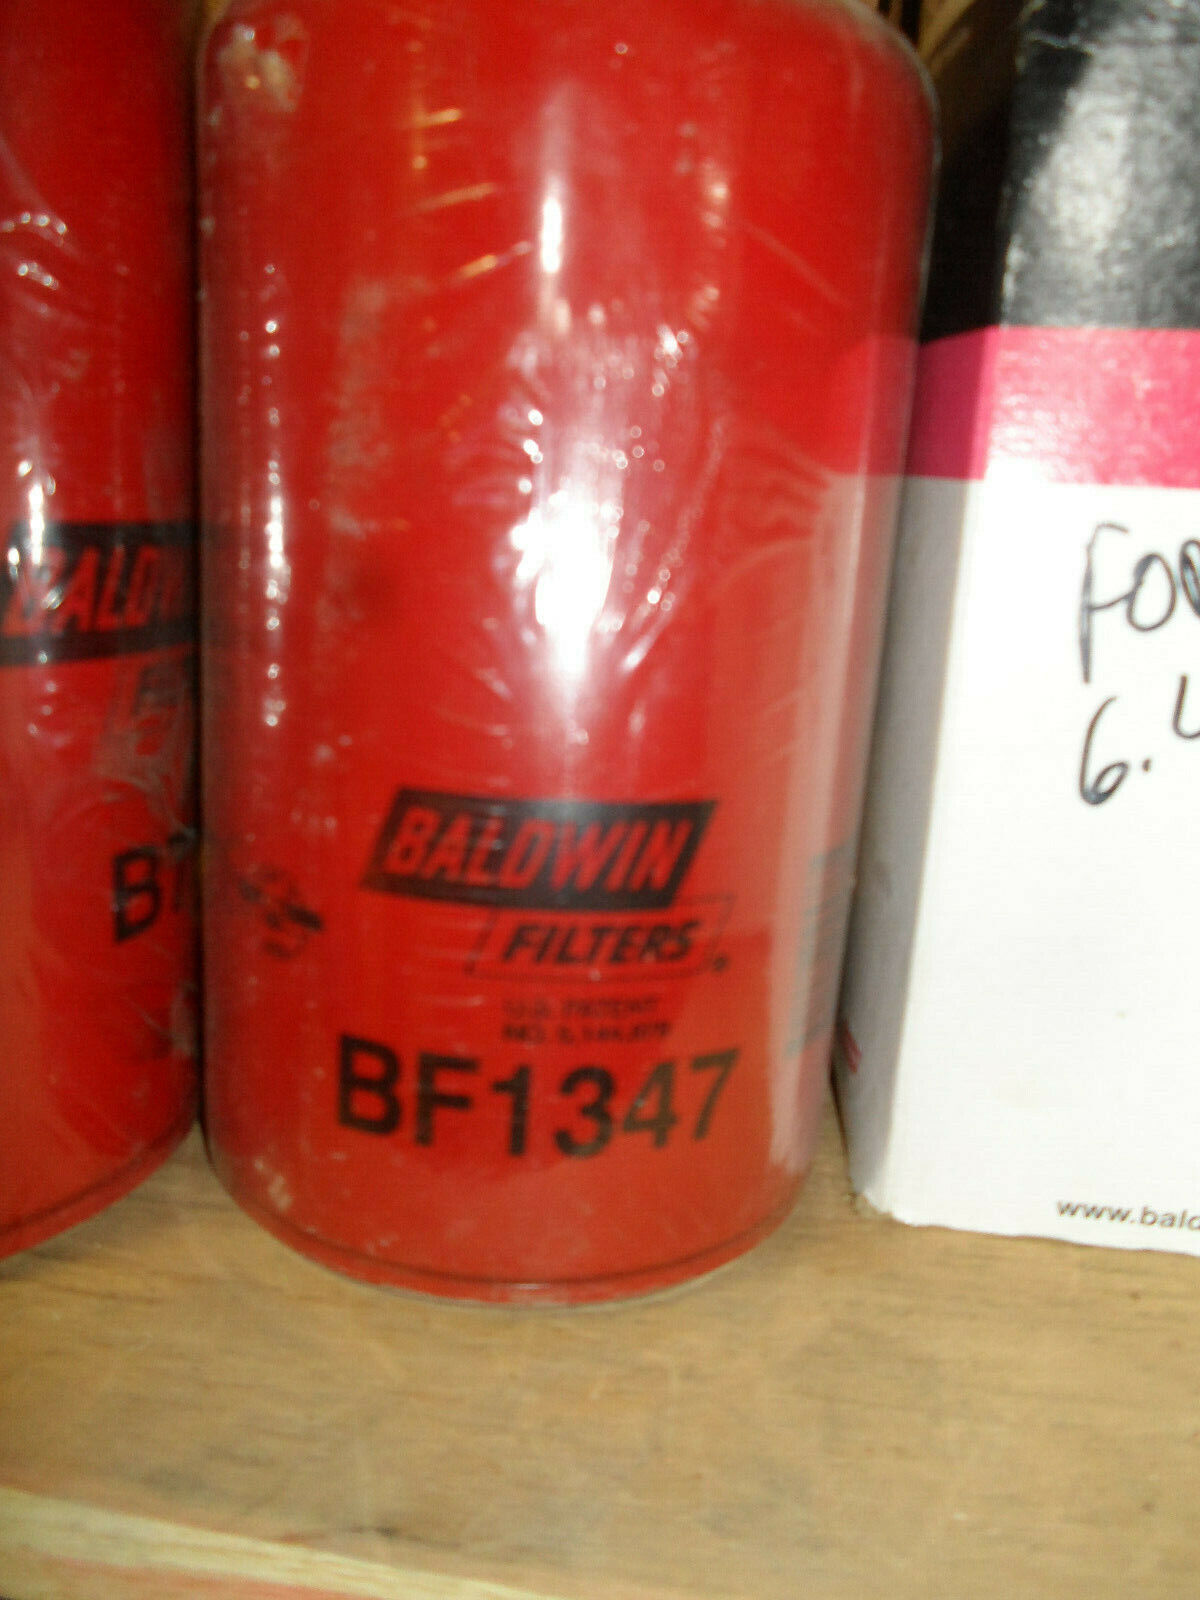 Baldwin BF1347 Fuel Filter